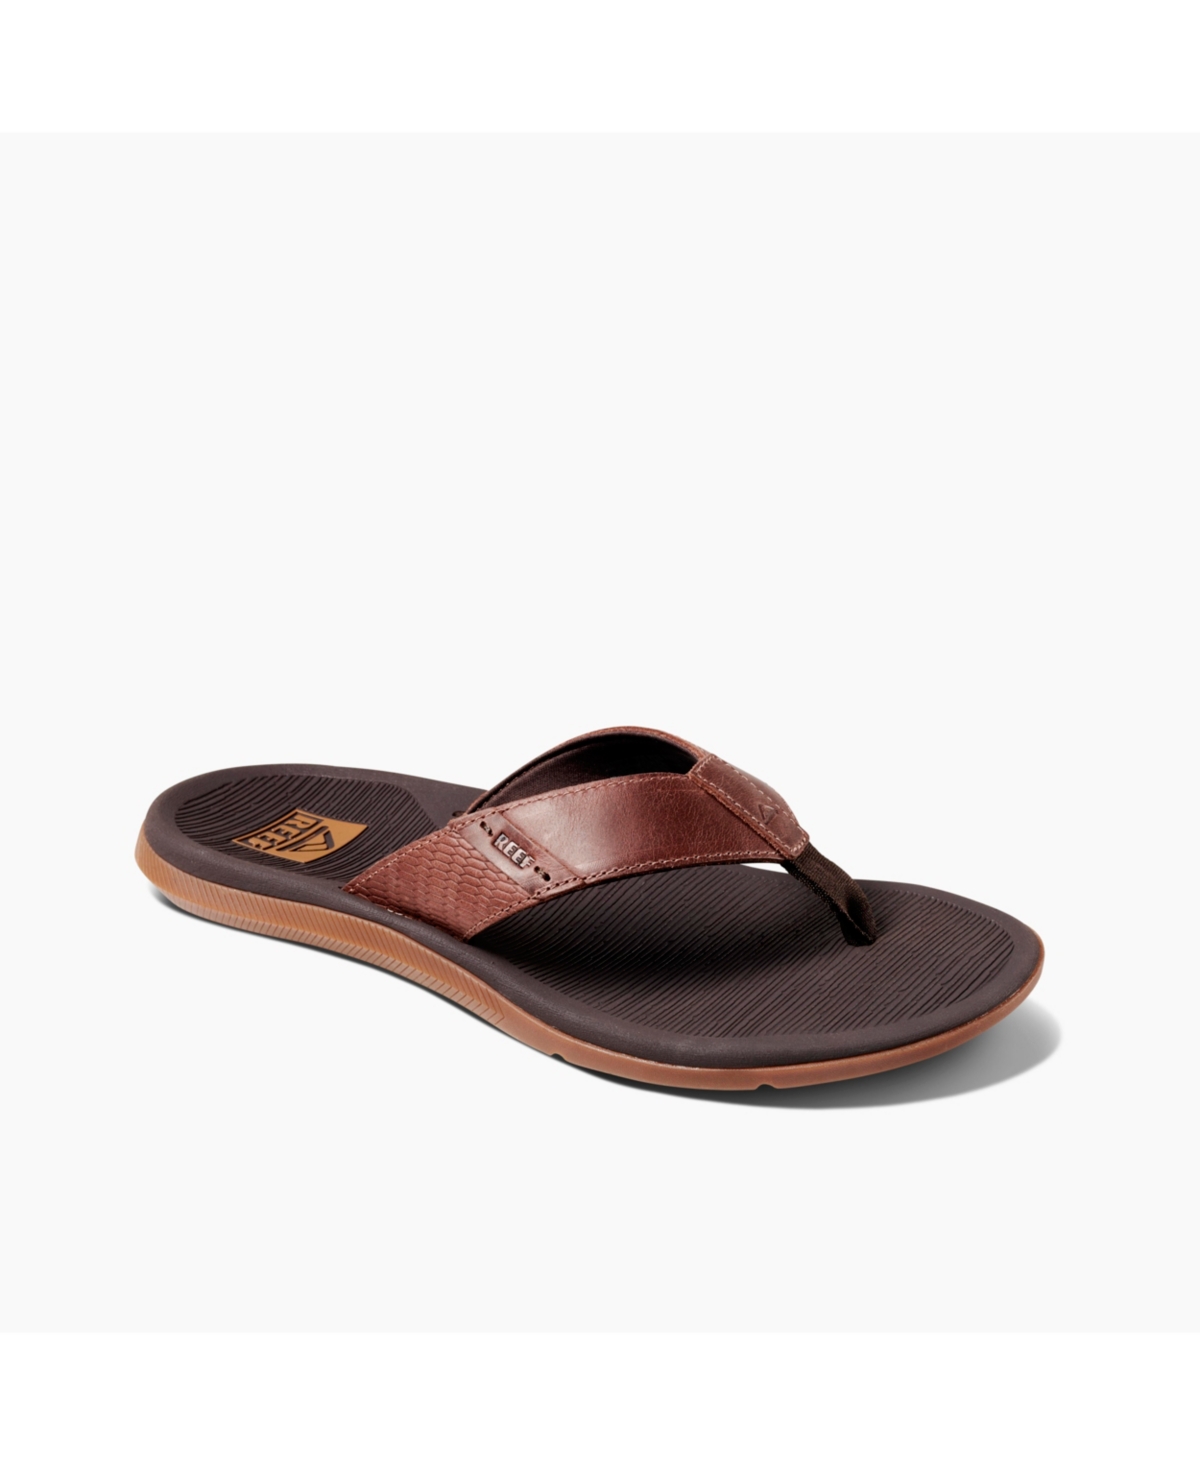 Men's Santa Ana Le Comfort Fit Sandals - Brown